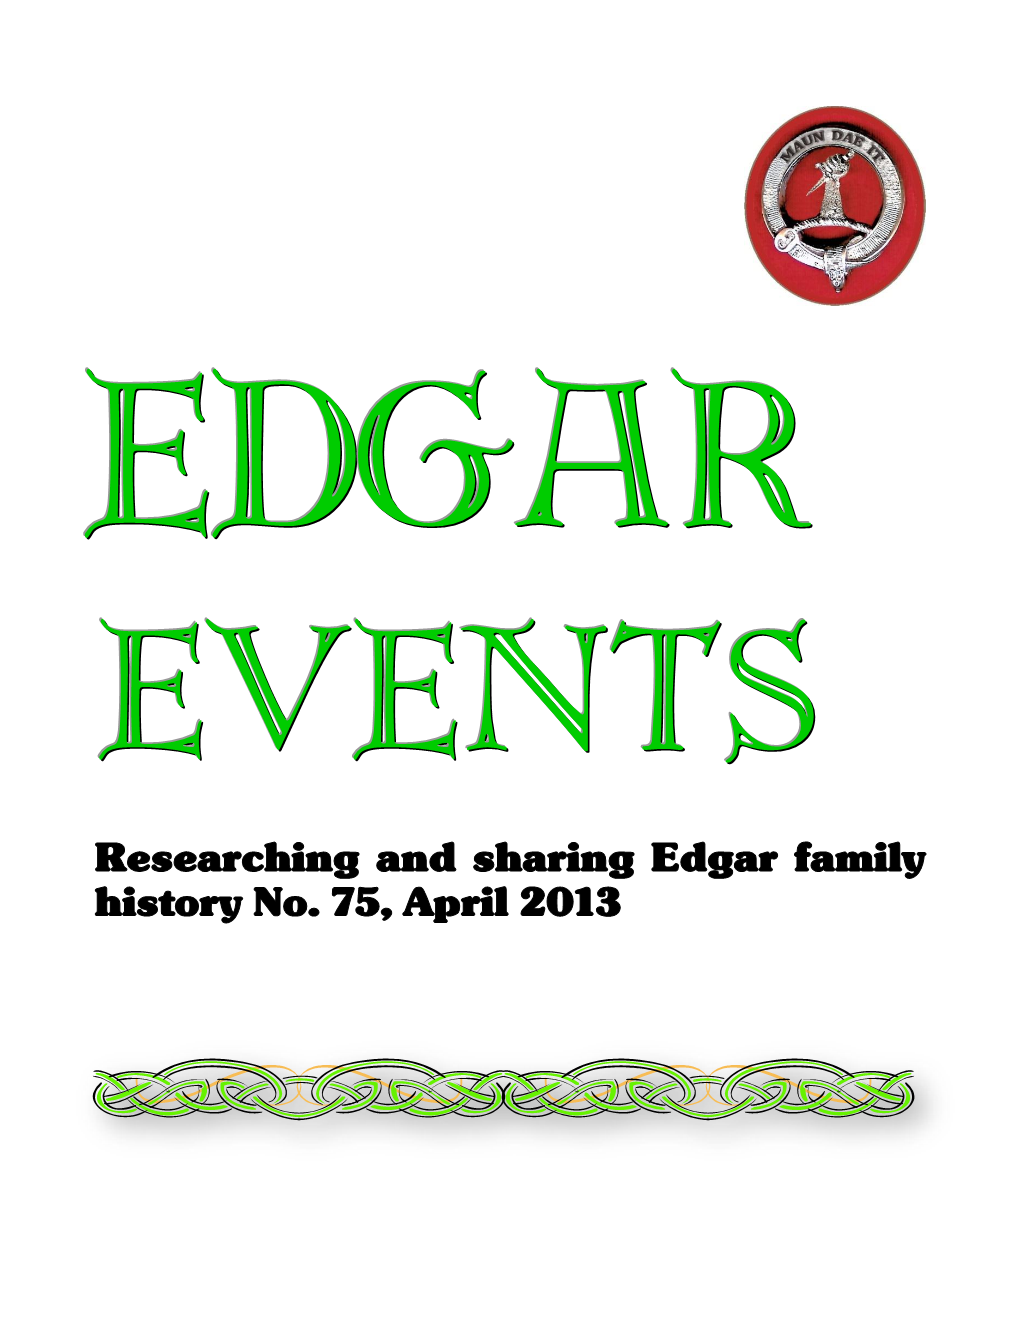 Edgar Events